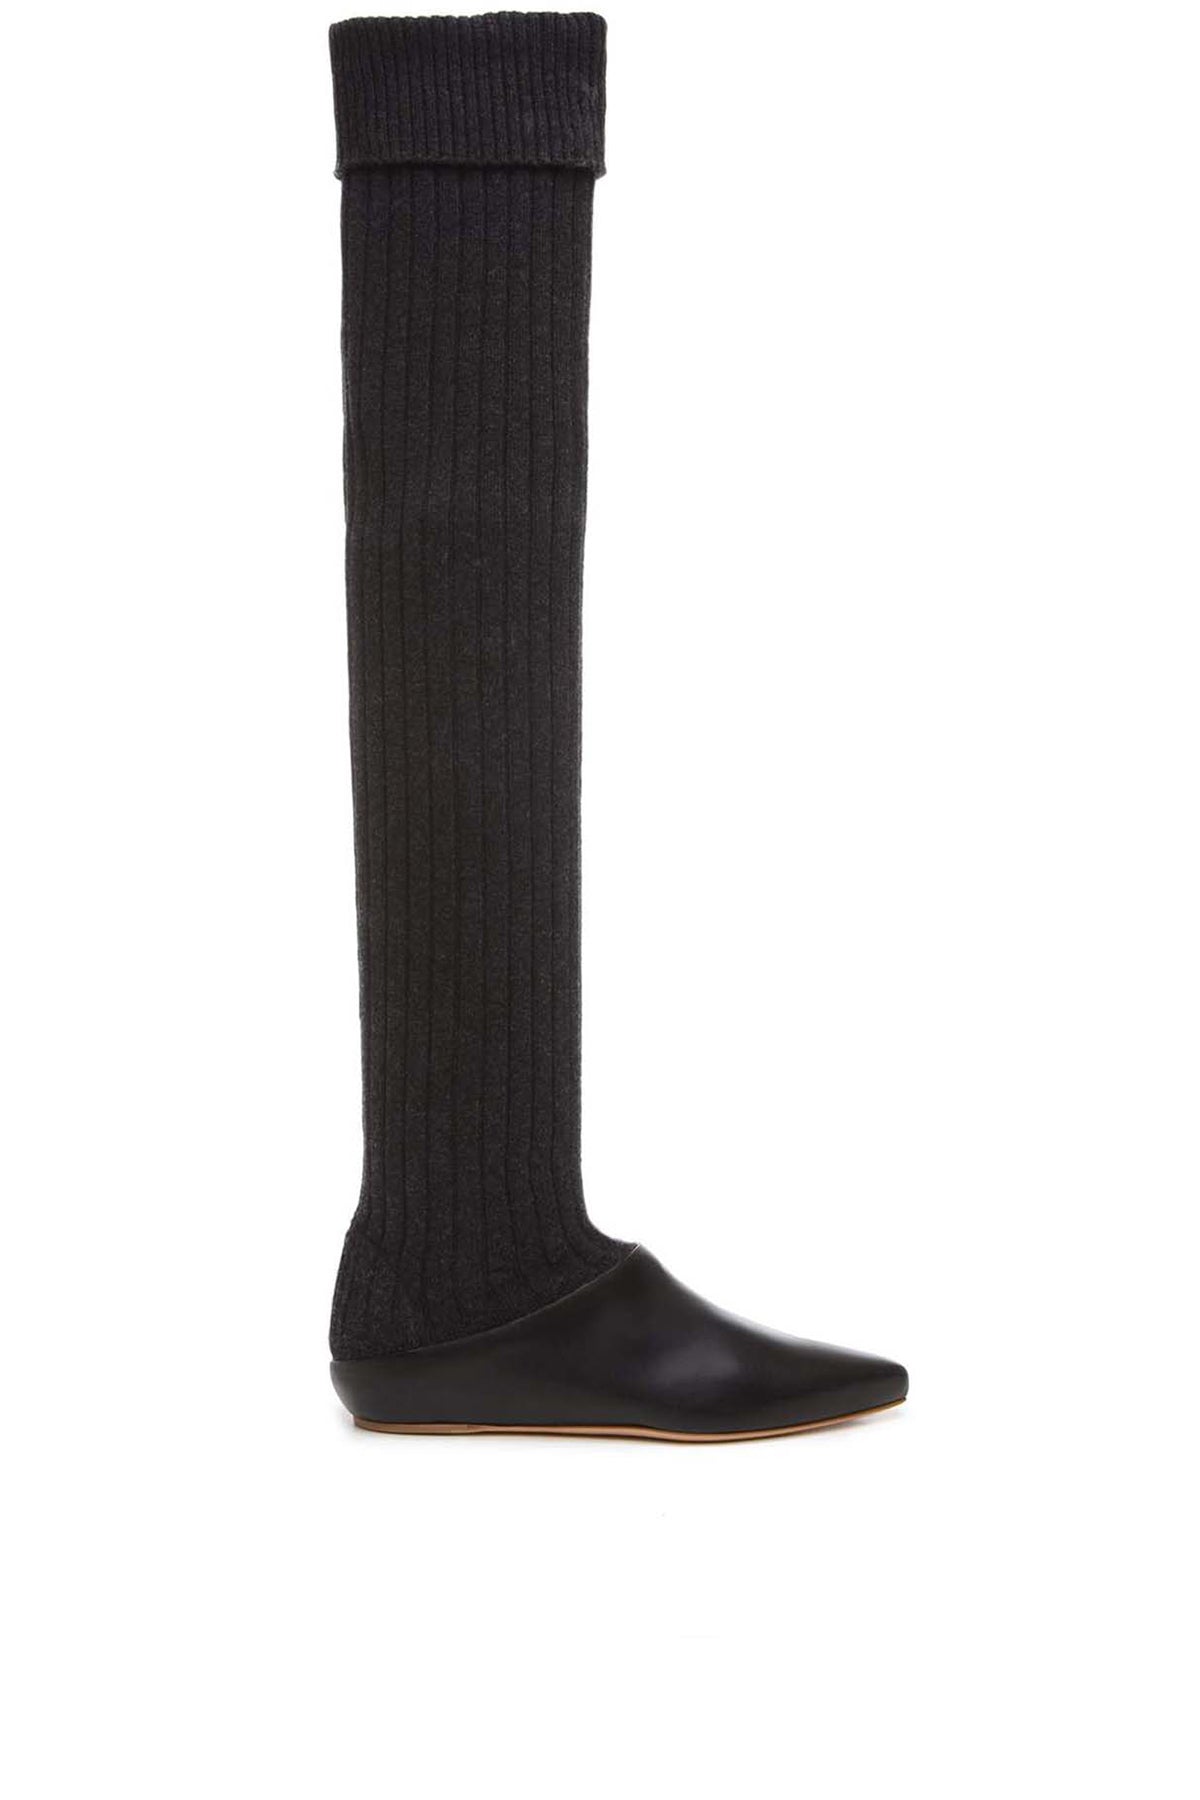 Jimena Boot in Black Cashmere & Leather